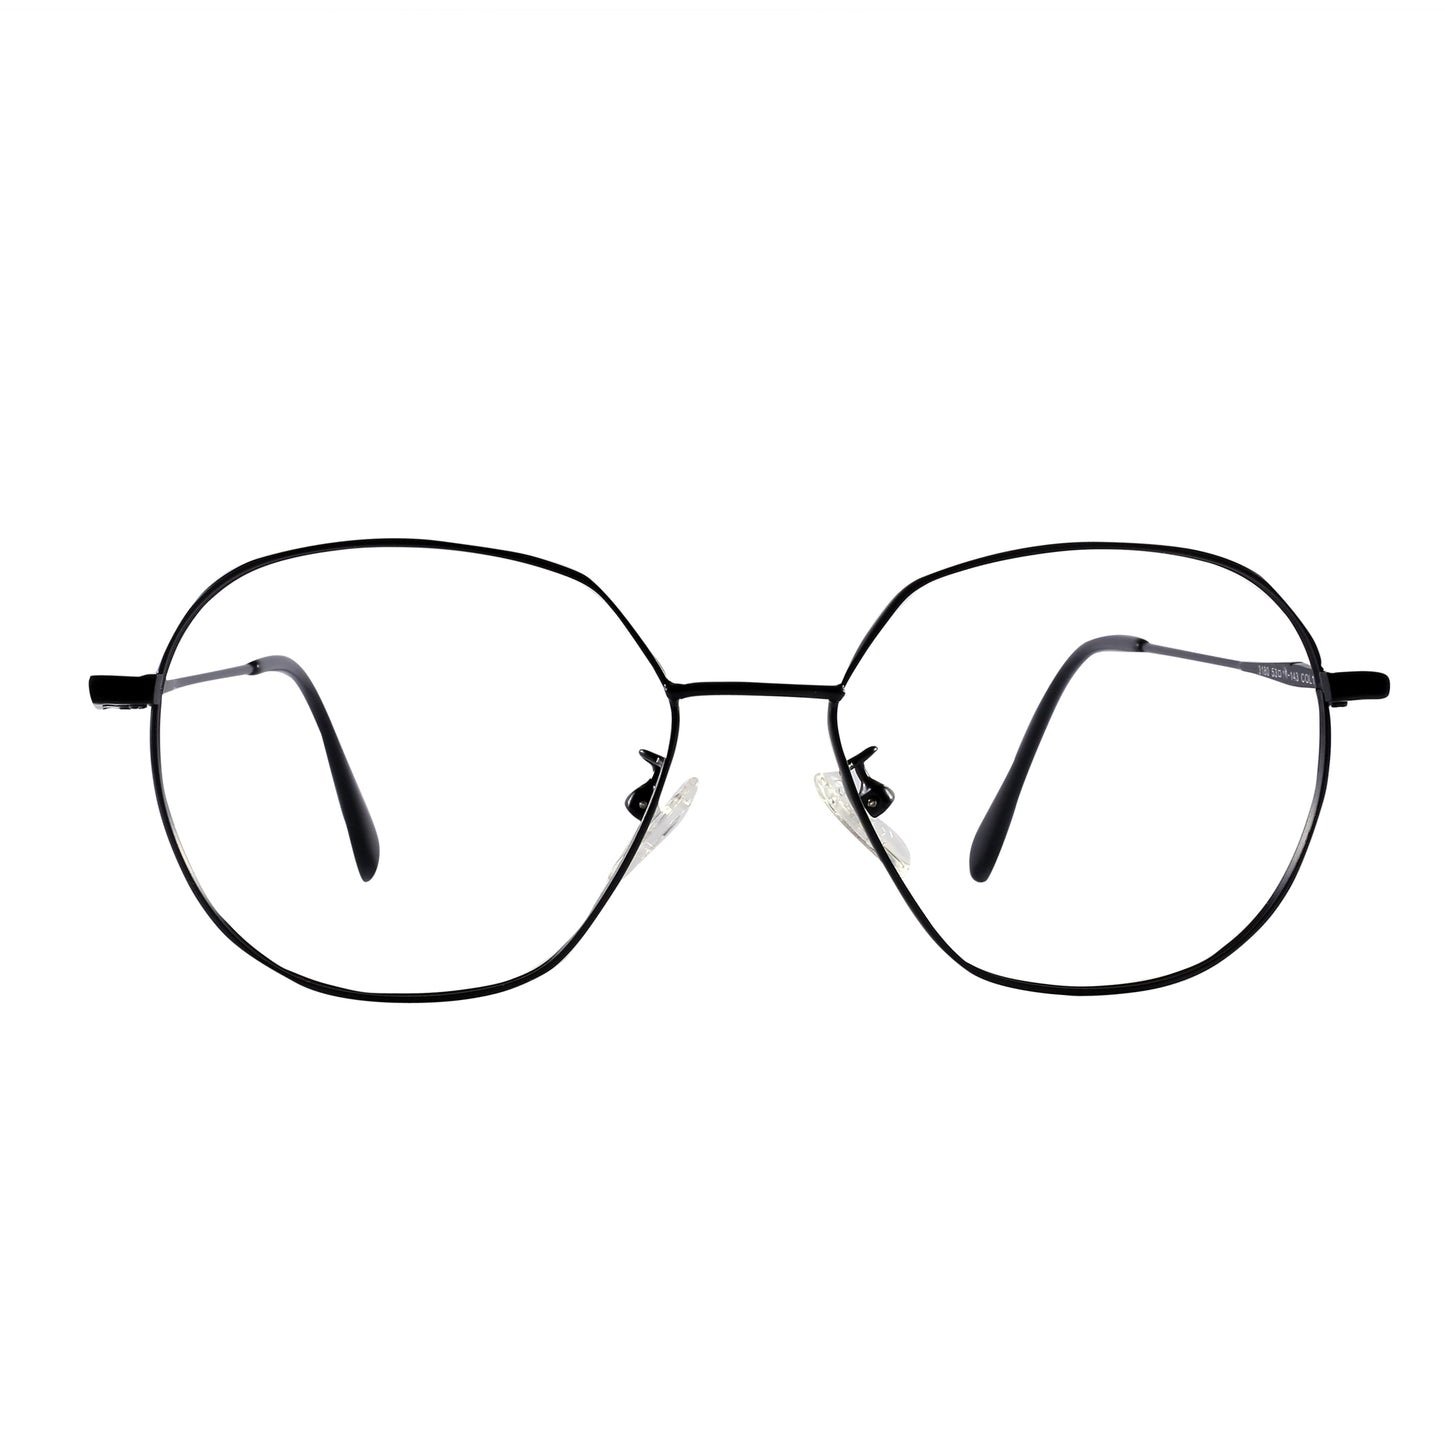 Loscomun Computer Glasses Black Round Eyeglasses